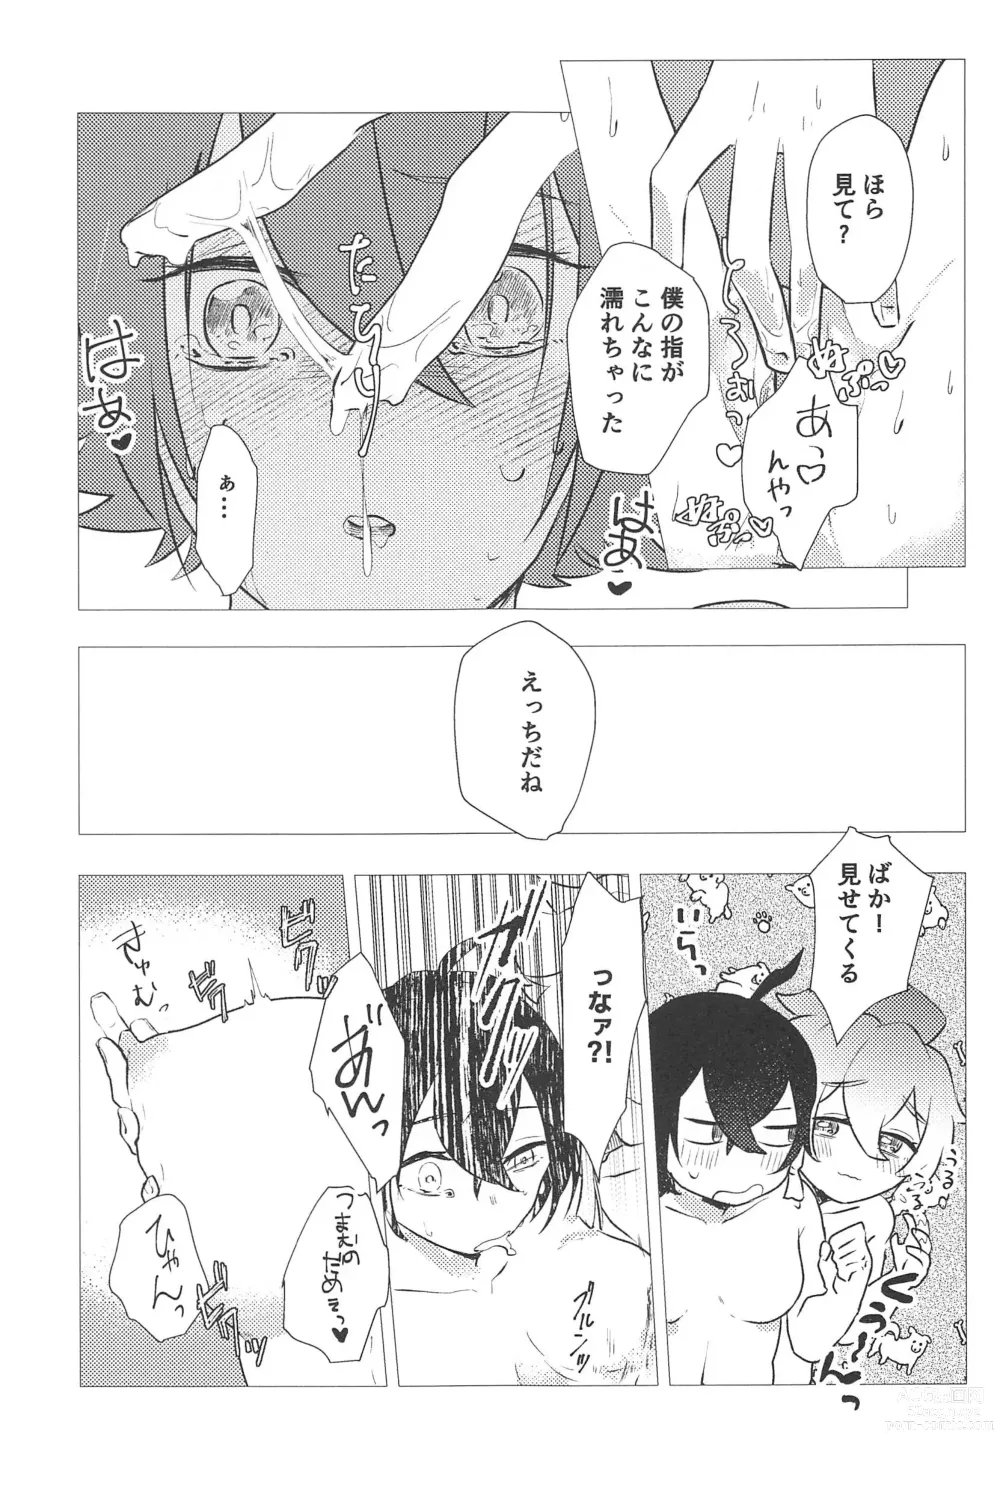 Page 24 of doujinshi Konnanotte Nai!